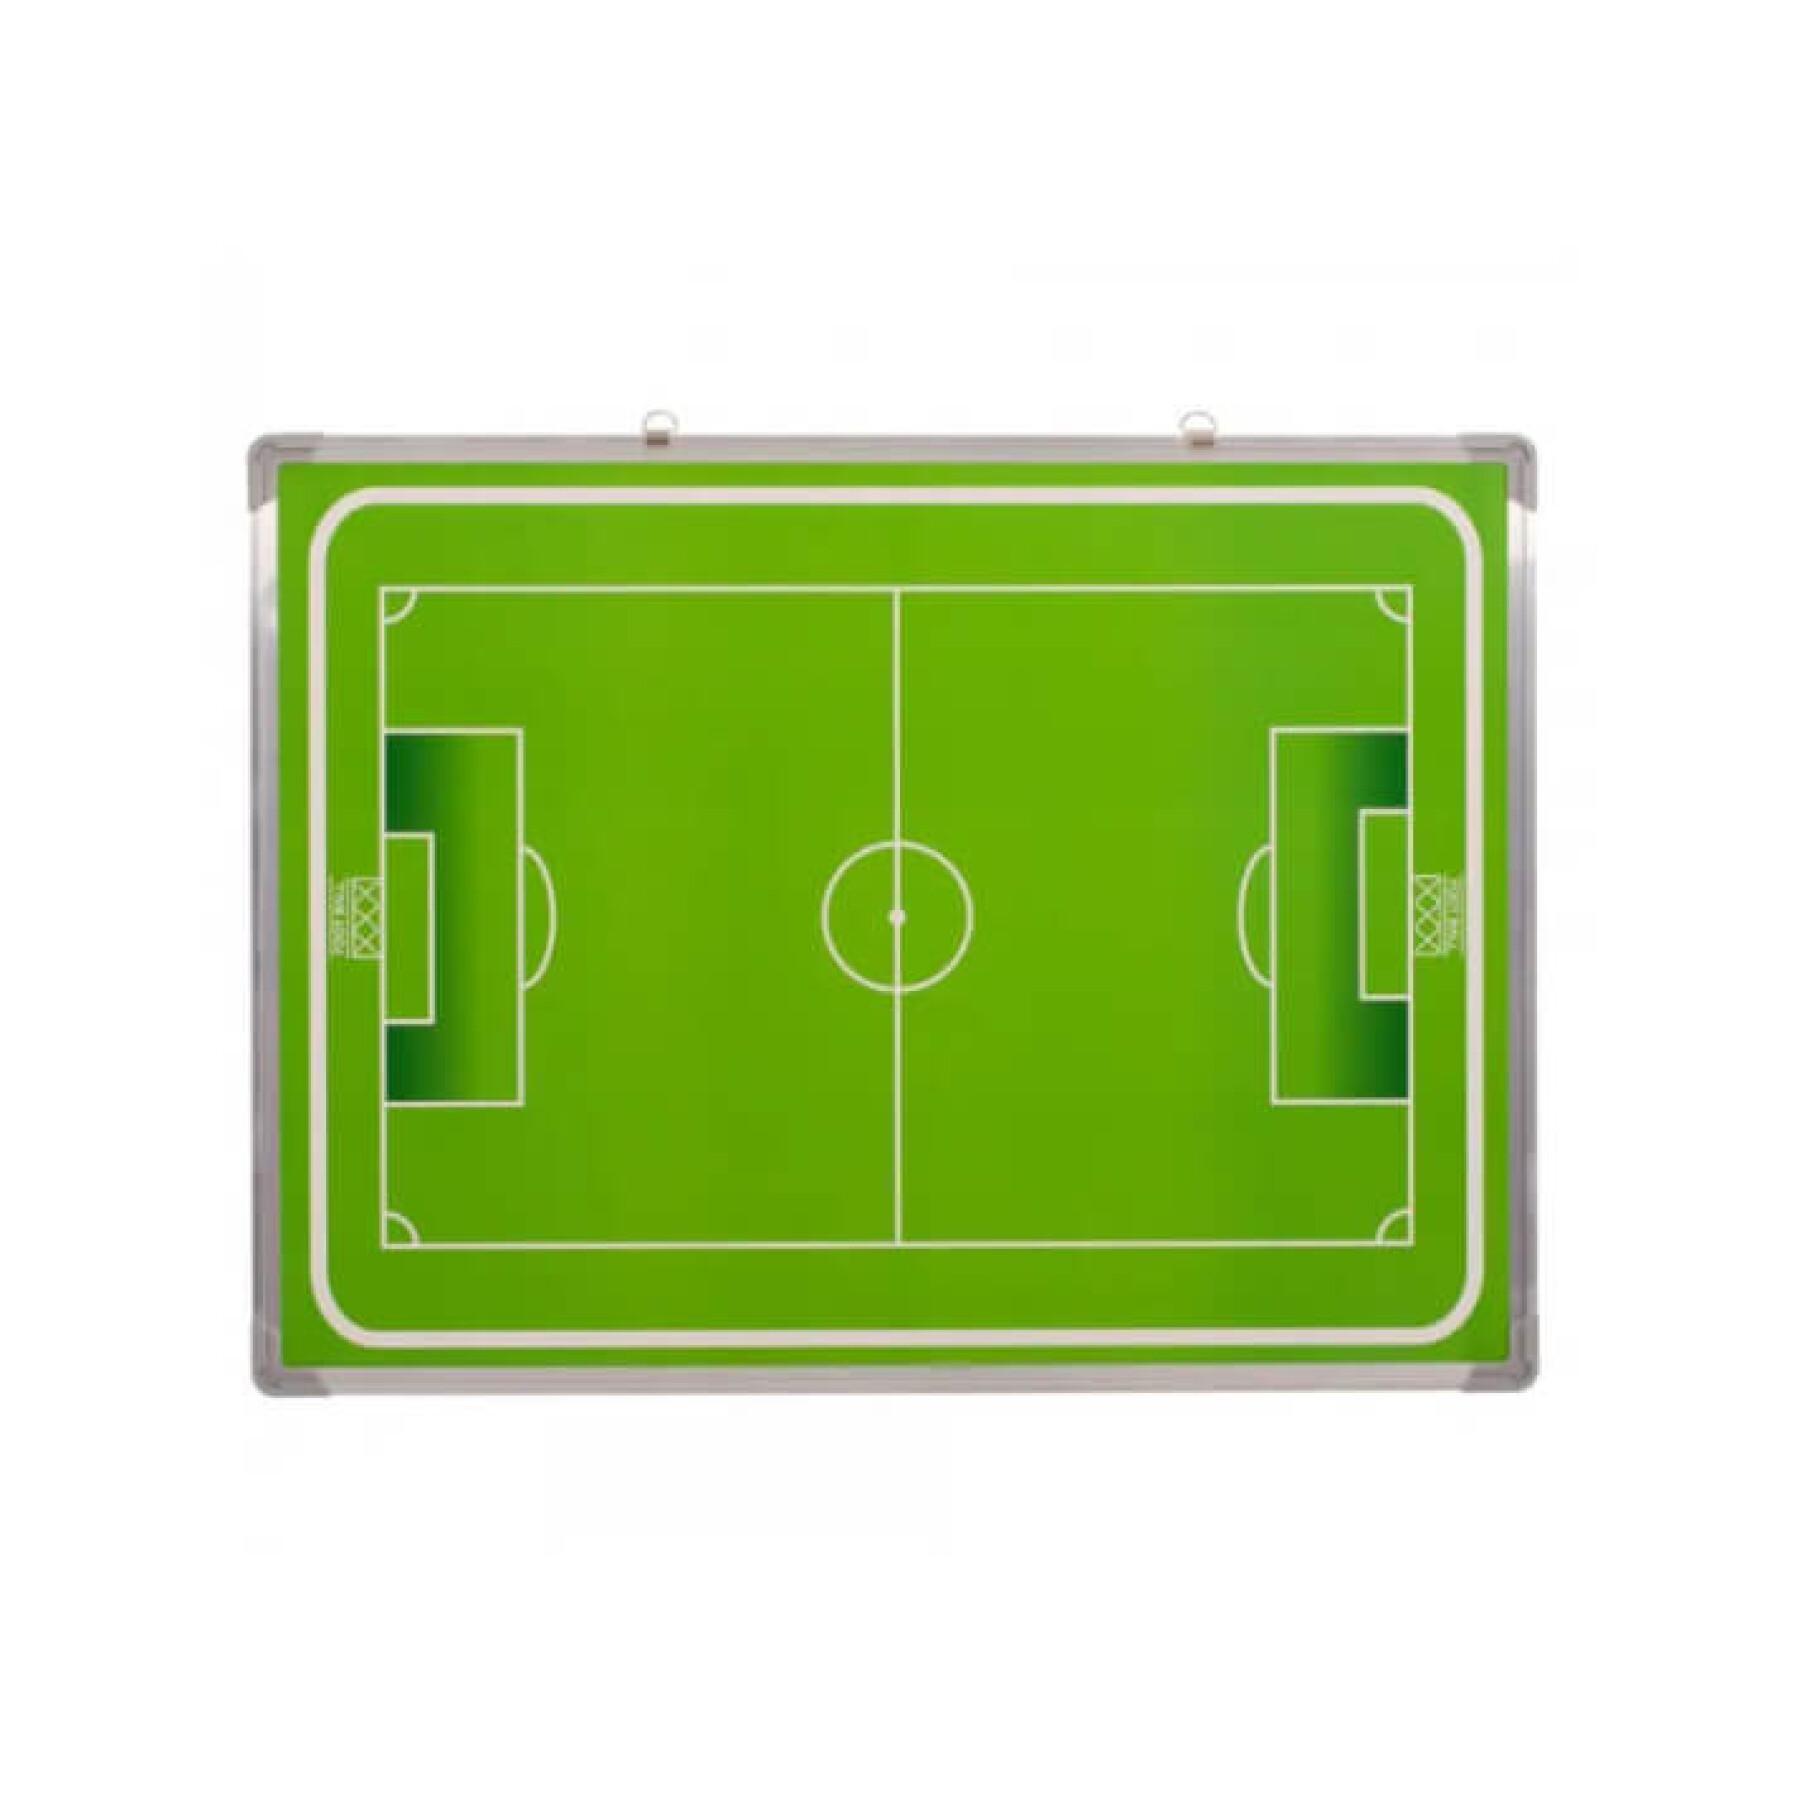 Tableau tactique football Softee Diamond - Carnet / Tableau - Matériel club  - Espace club